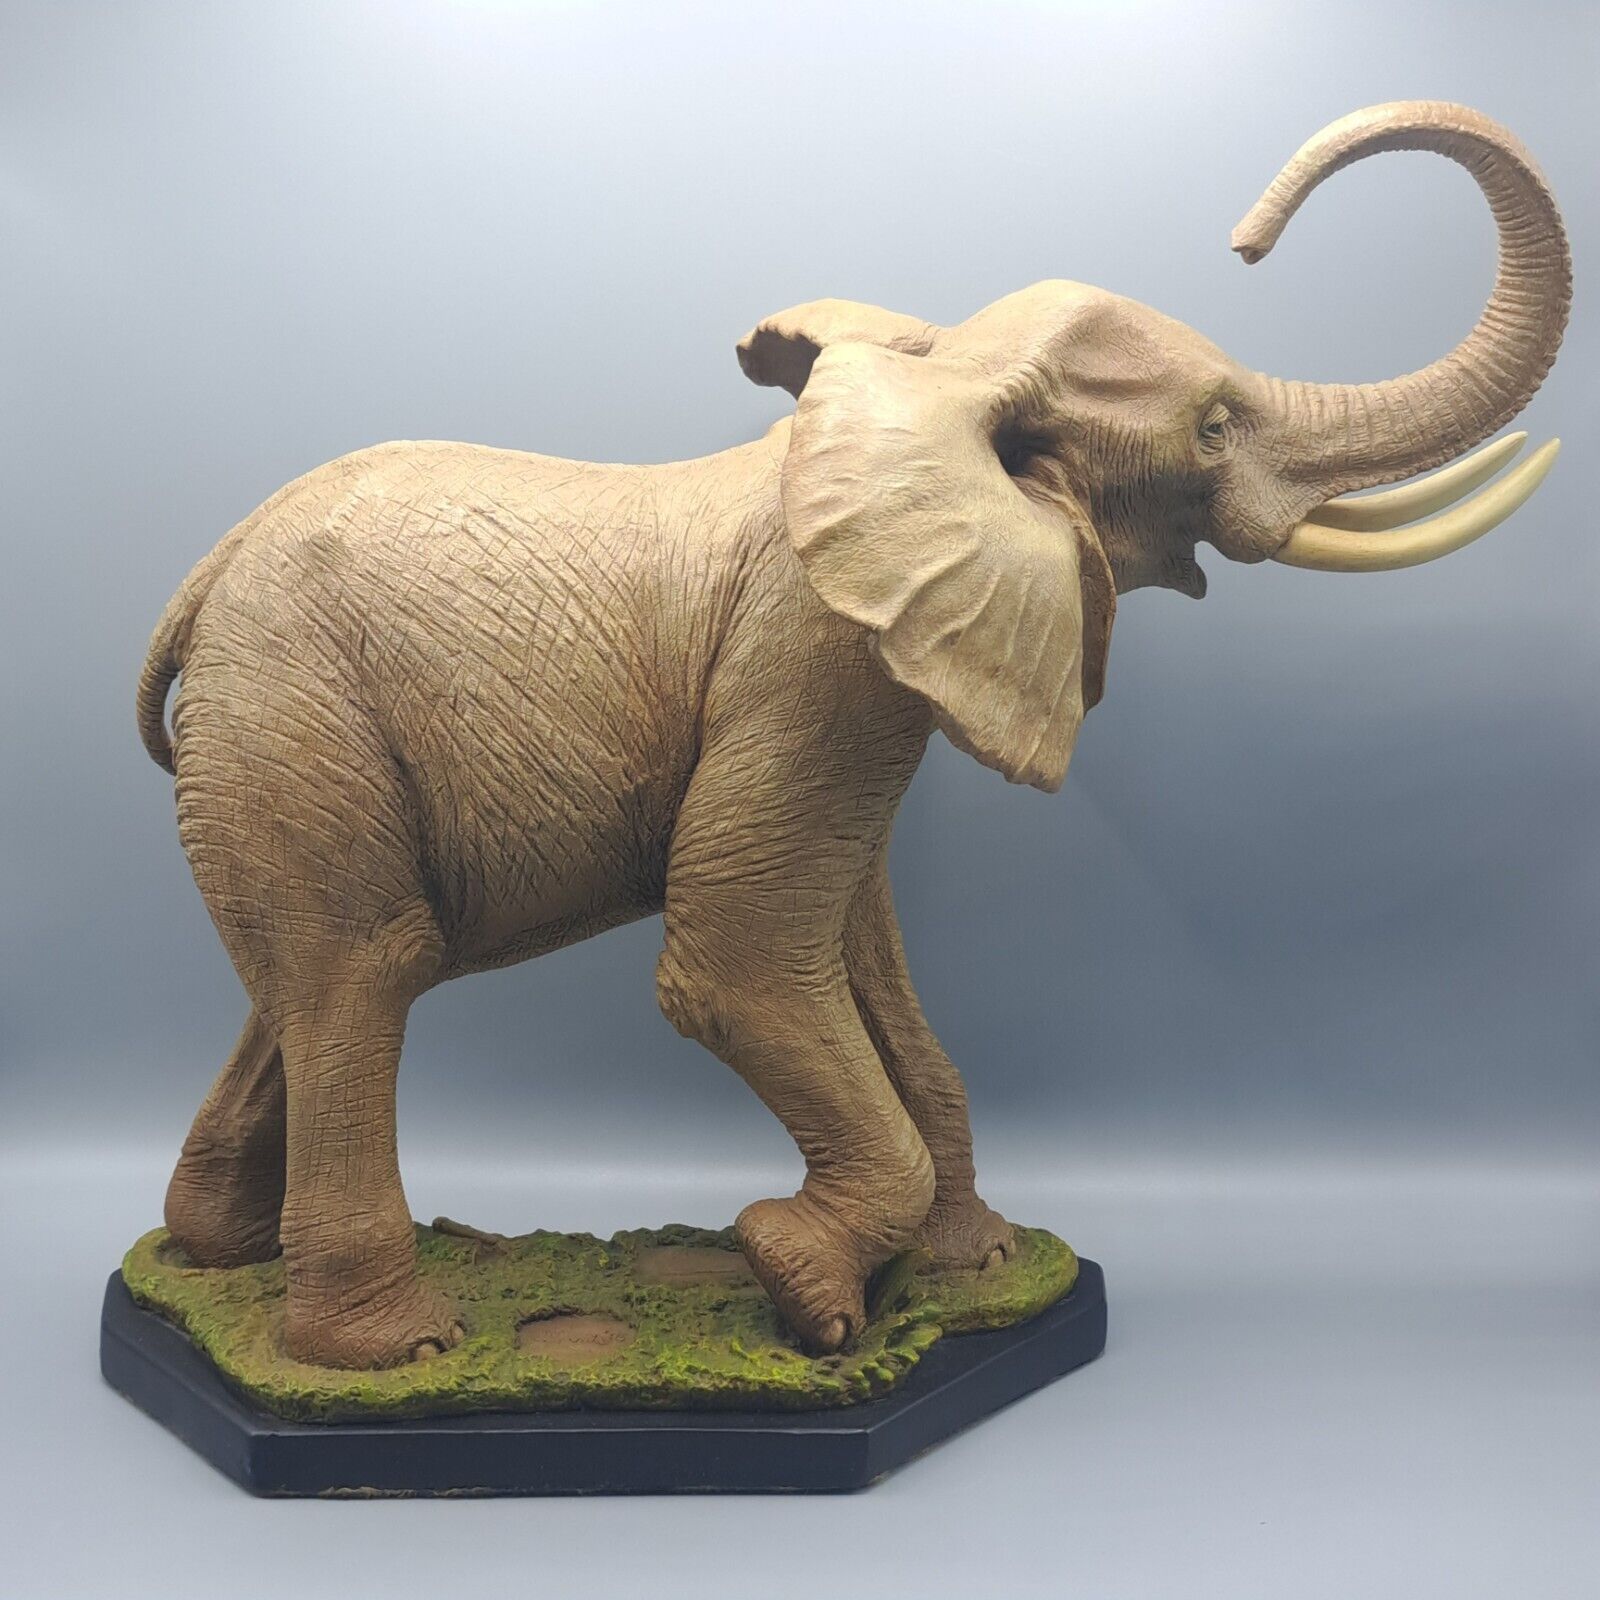 Vintage CreArt 1995 African Elephant Living Sculpture Signed Limited E 1064/1500